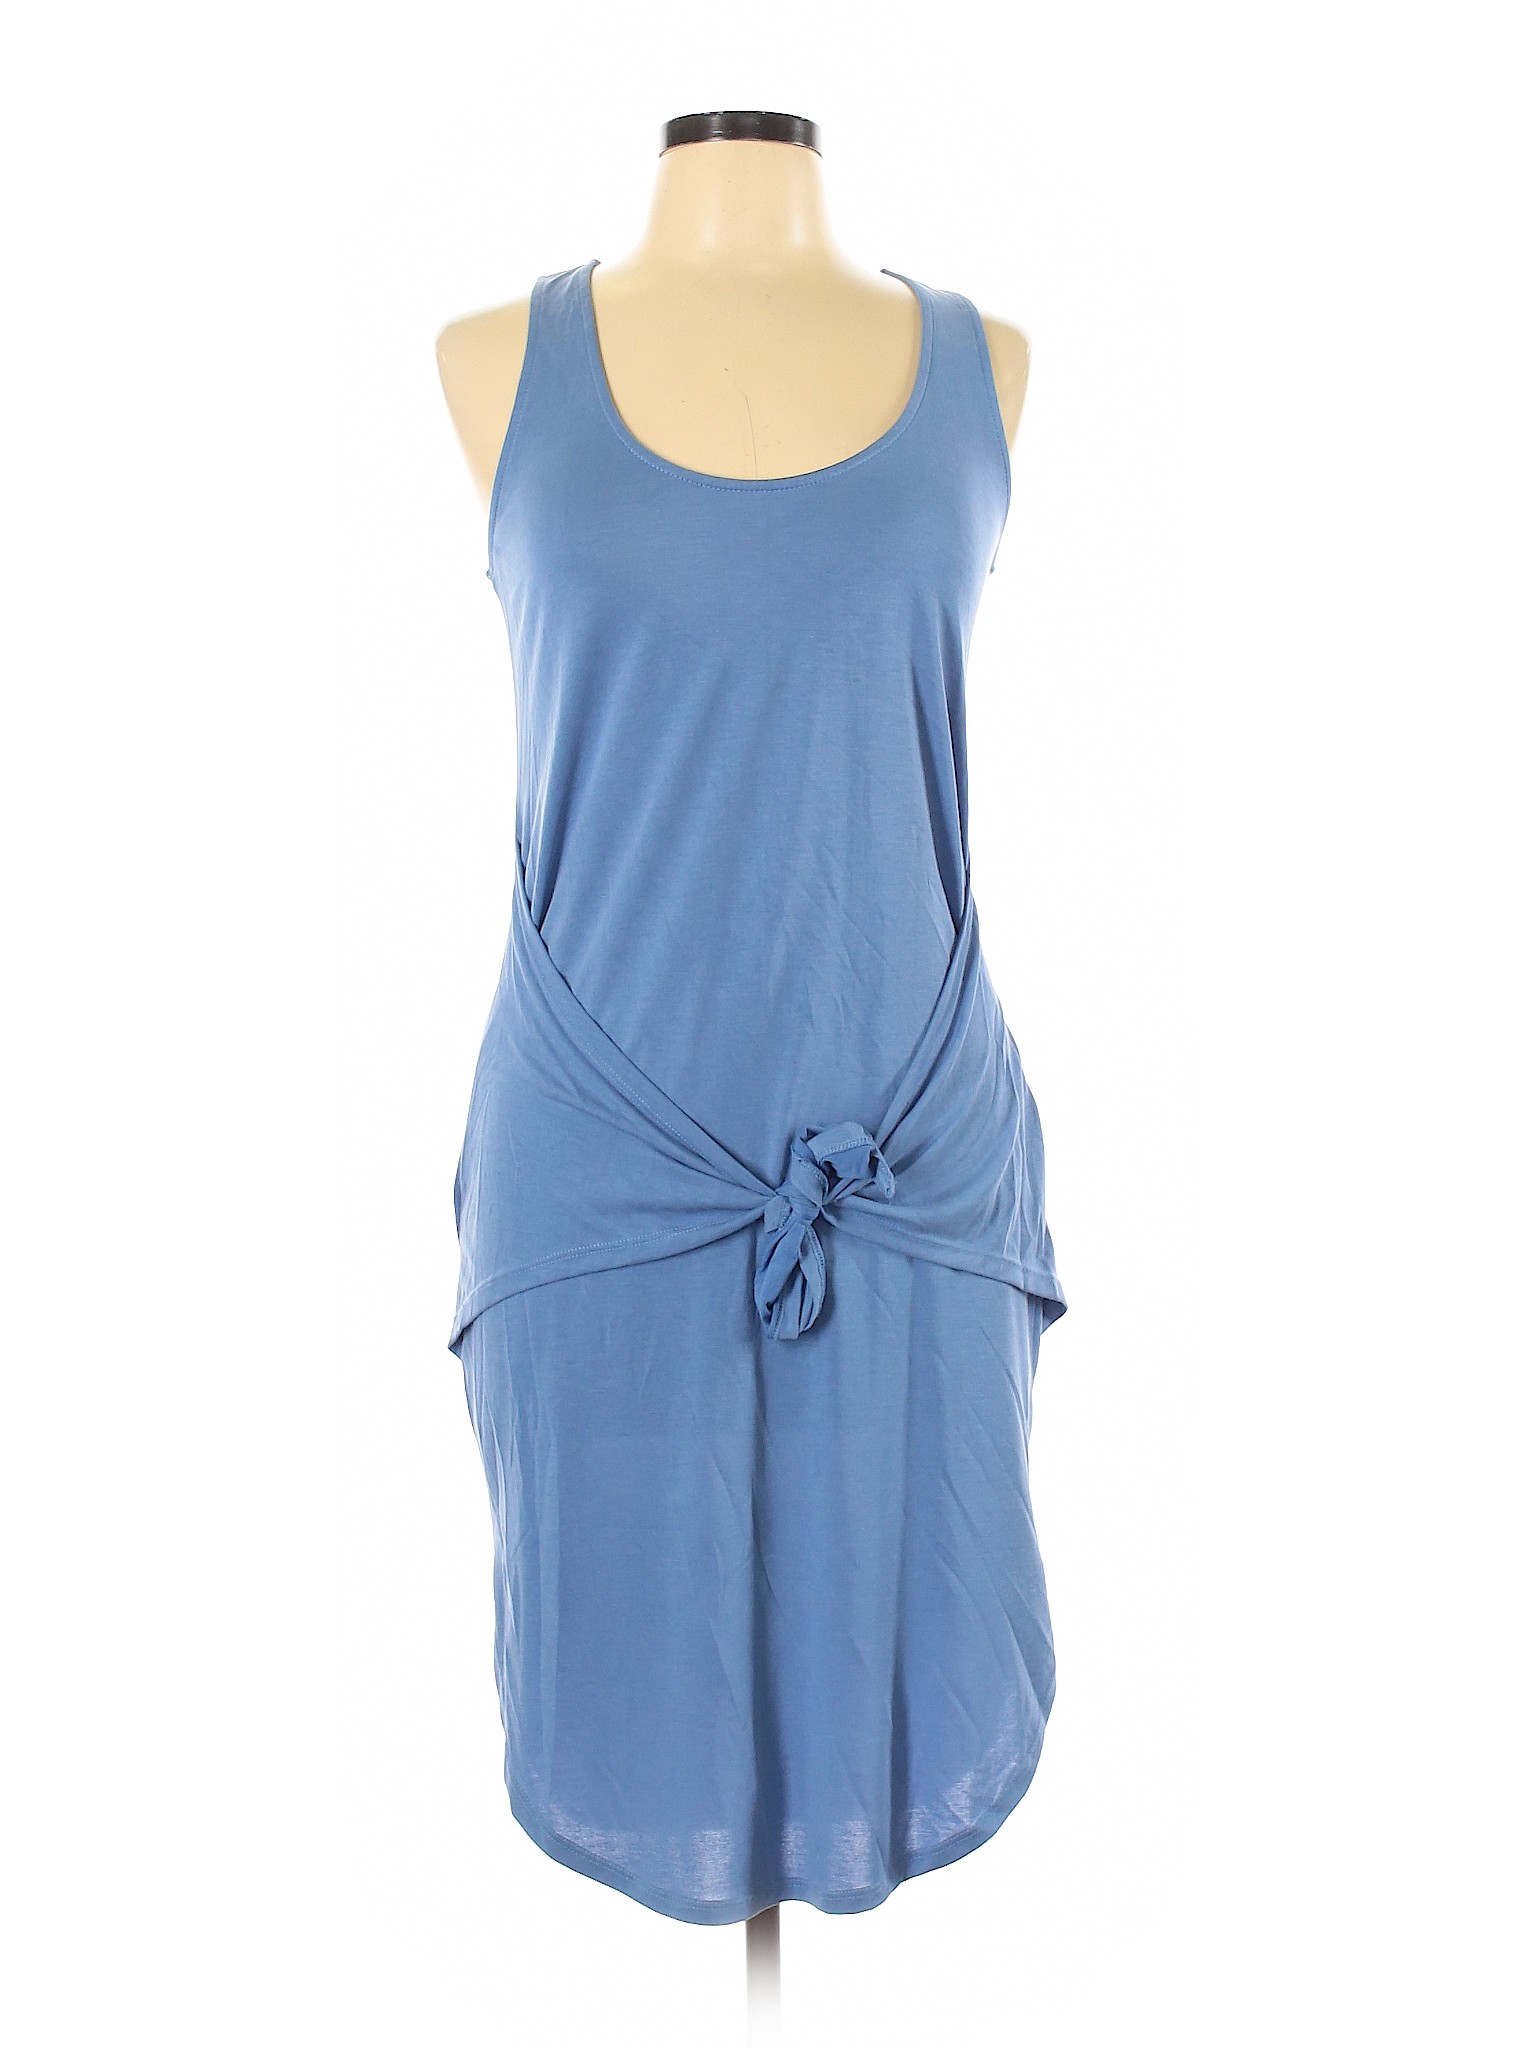 GB Women Blue Casual Dress M | eBay